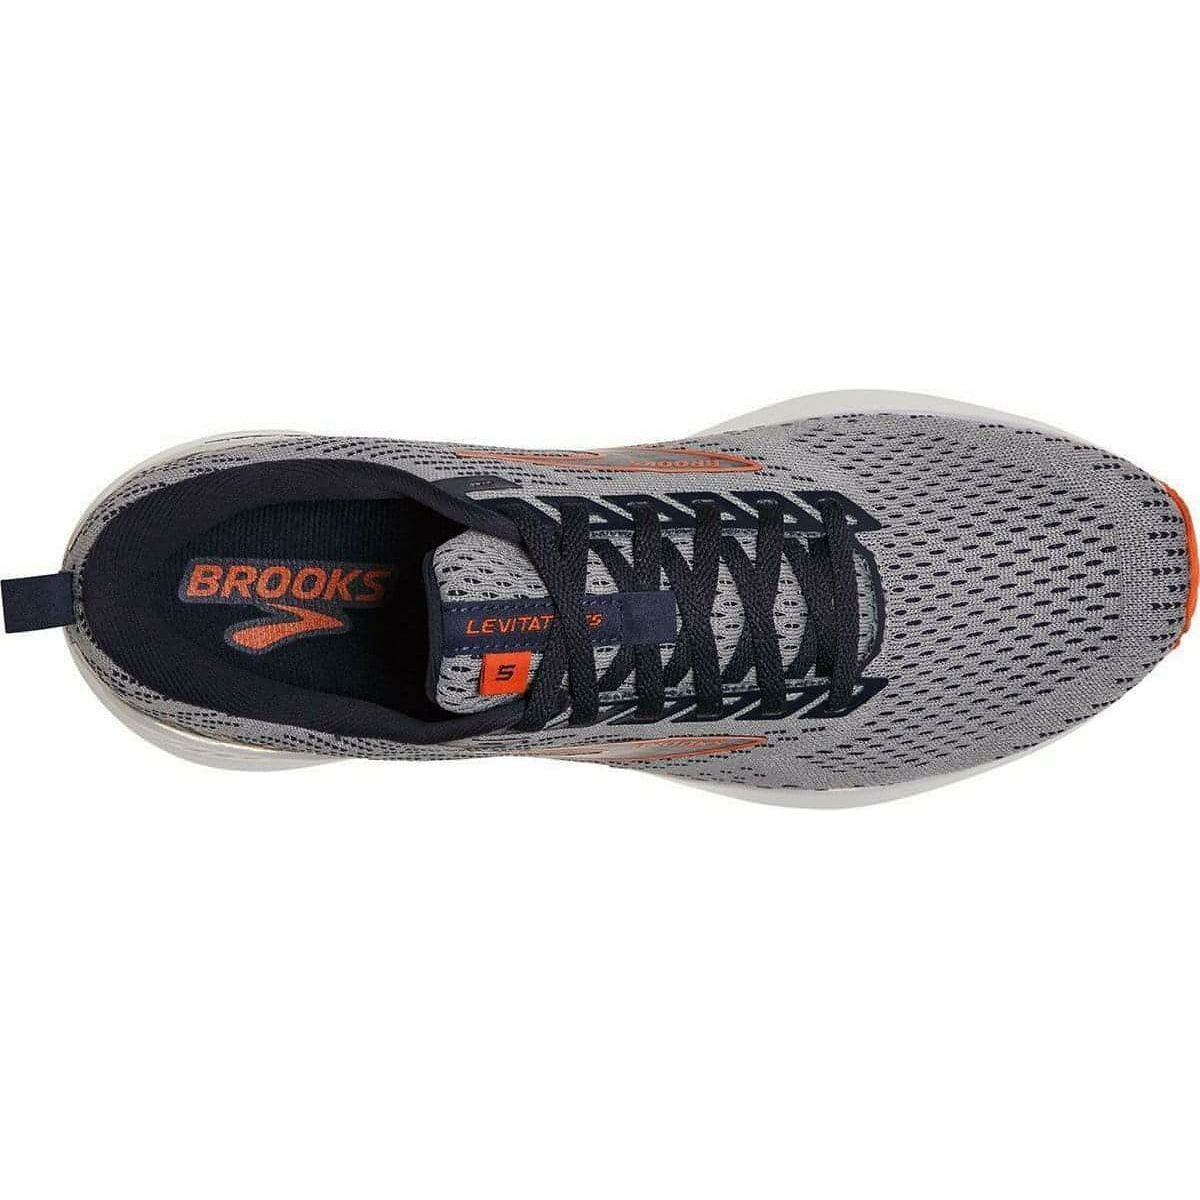 Brooks Levitate GTS 5 Mens Running Shoes - Grey - Start Fitness